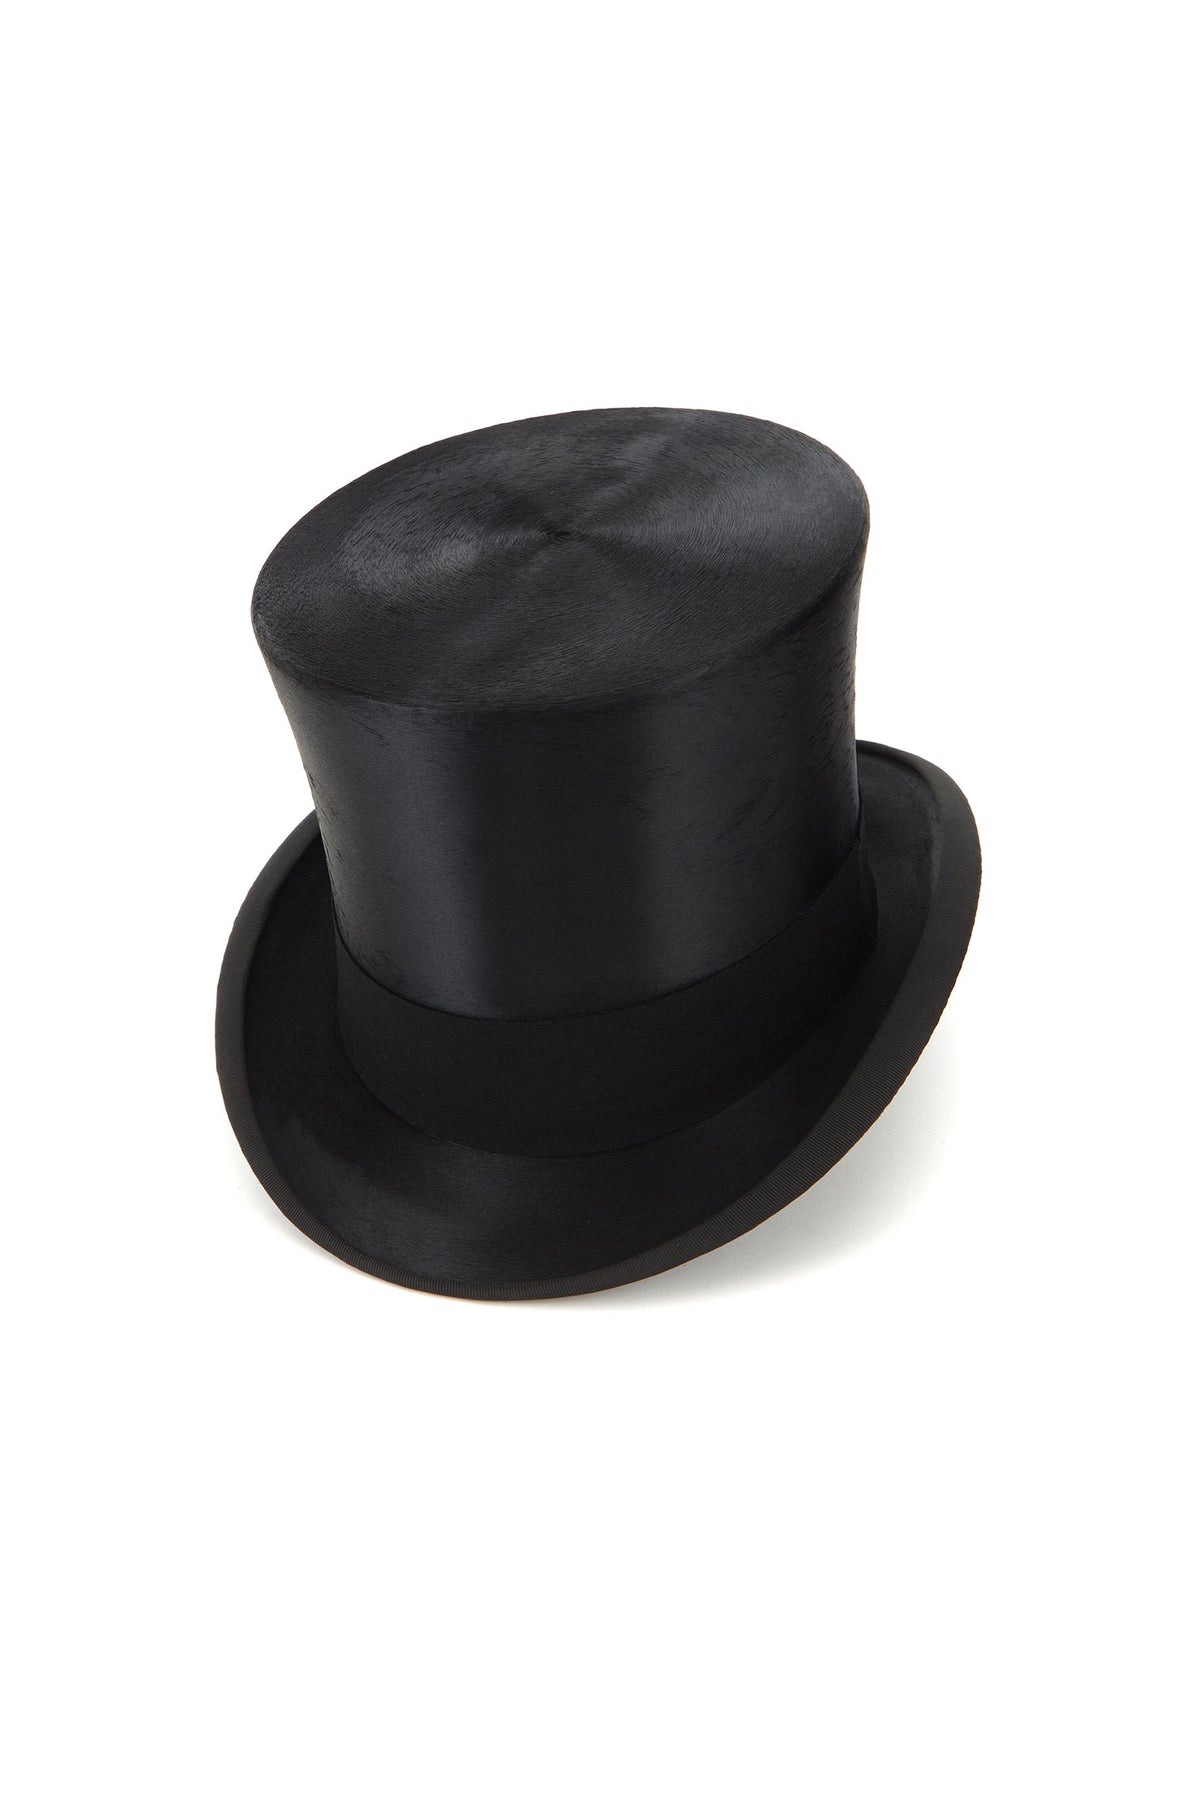 Black Silk Top Hat - Lock & Co. Hats for Men & Women top hat